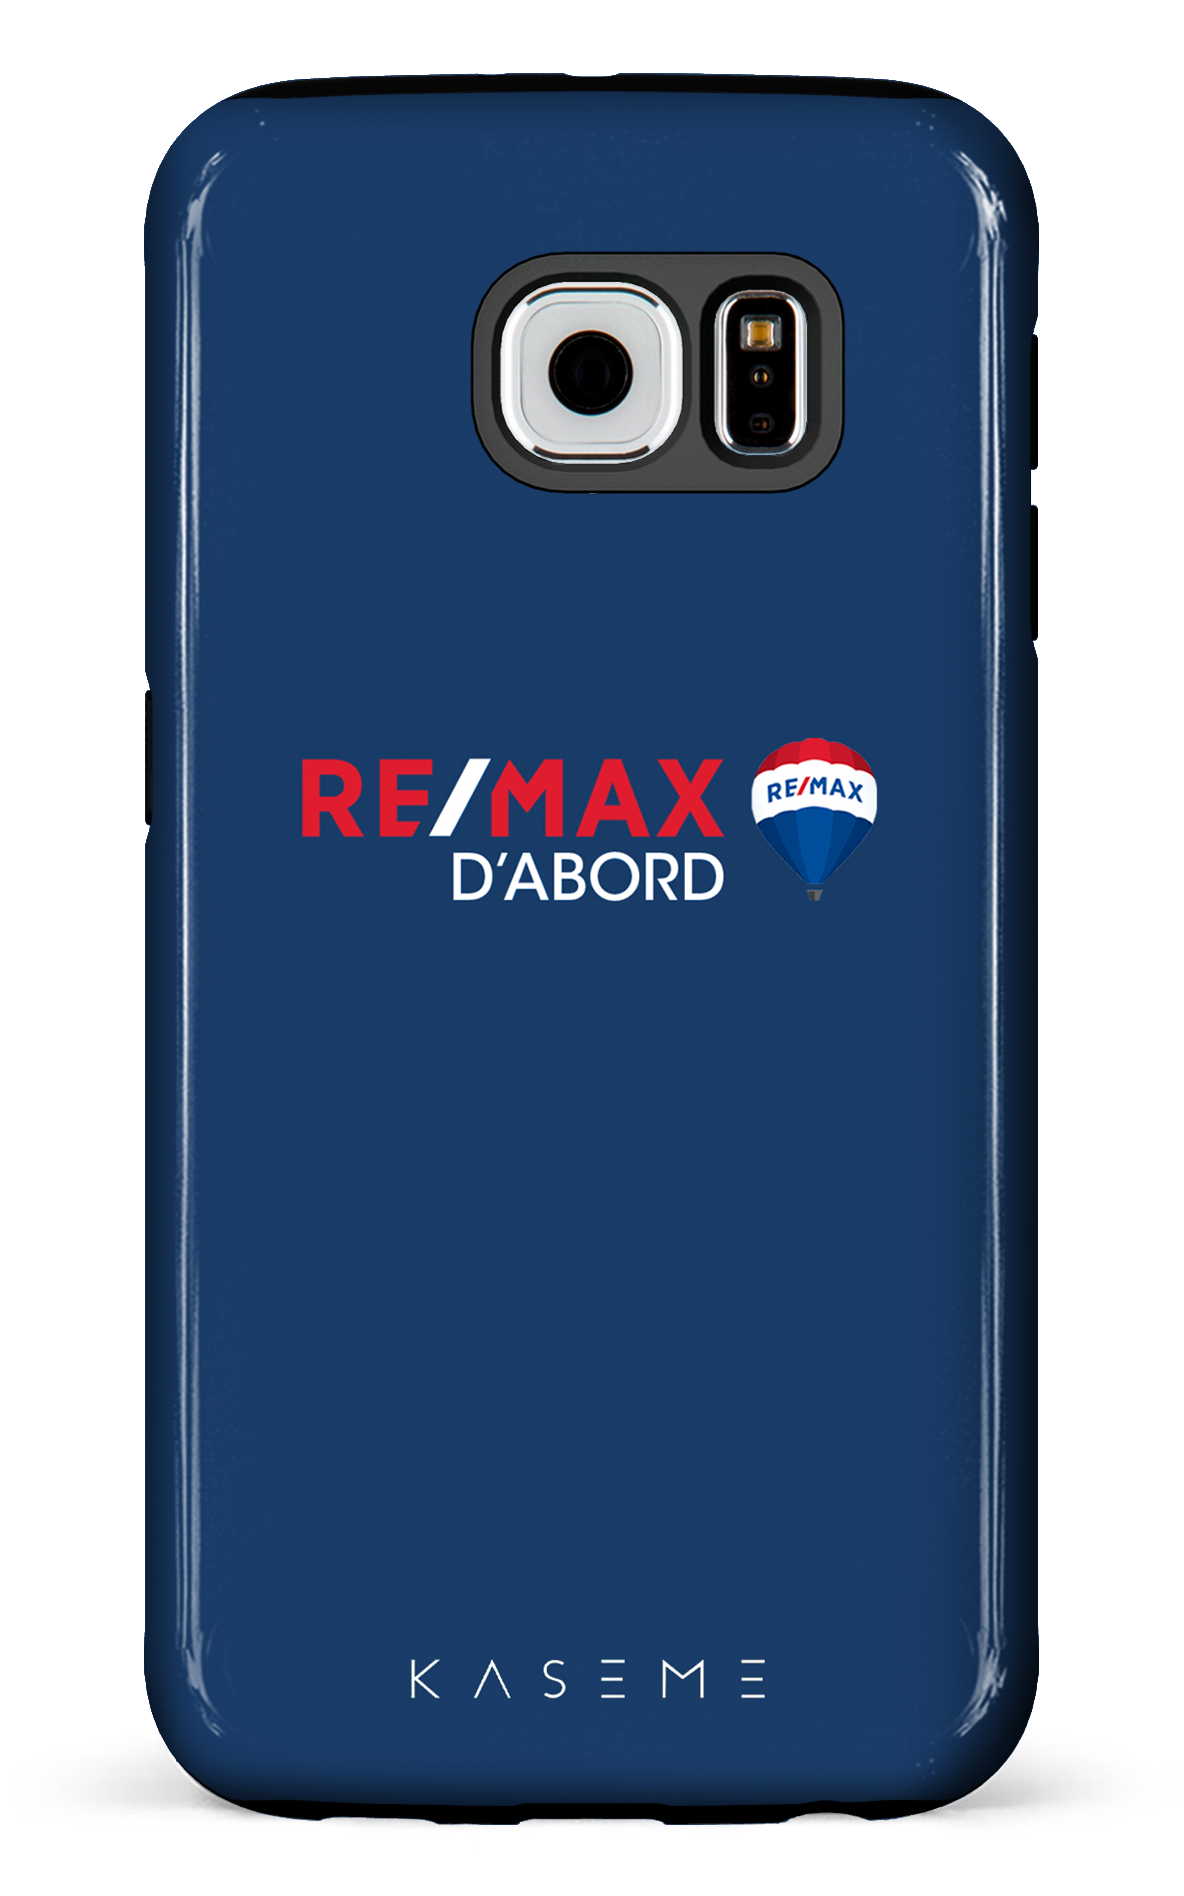 Remax D'abord Bleu - Galaxy S6